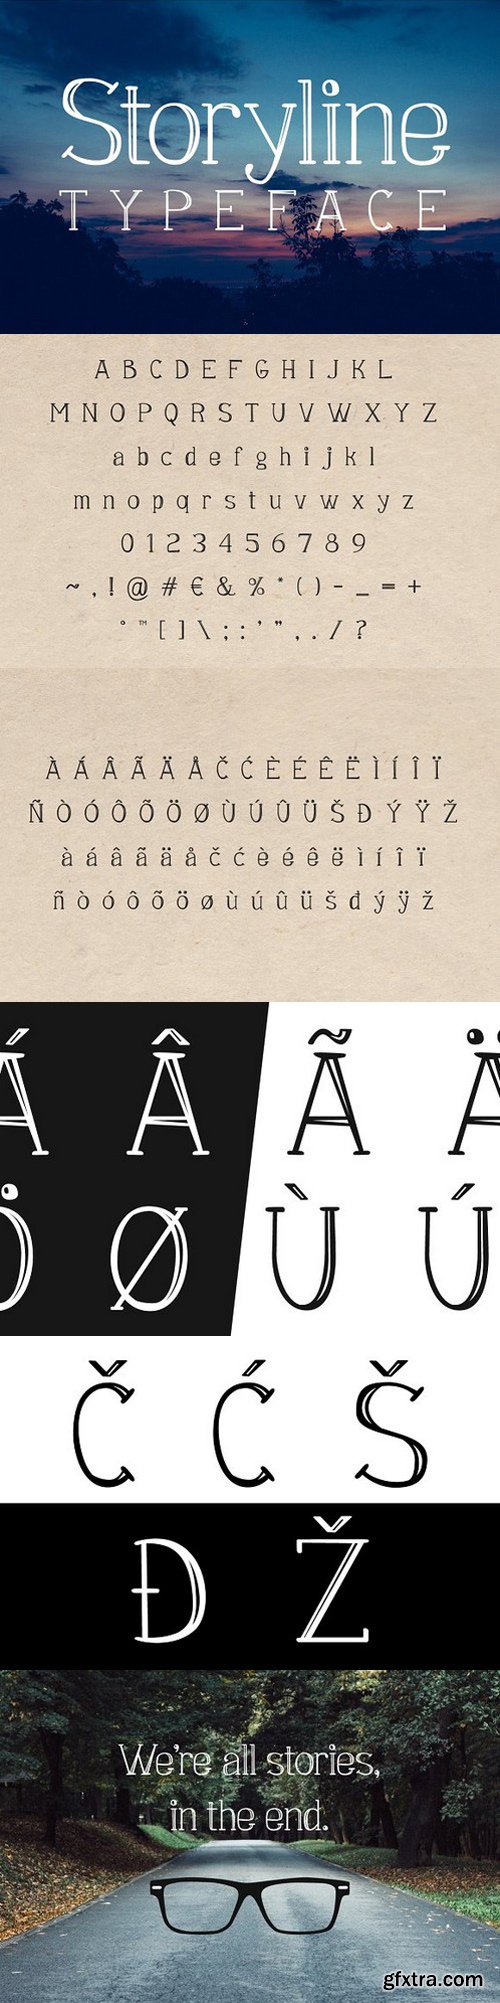 CM - Storyline typeface 1531760